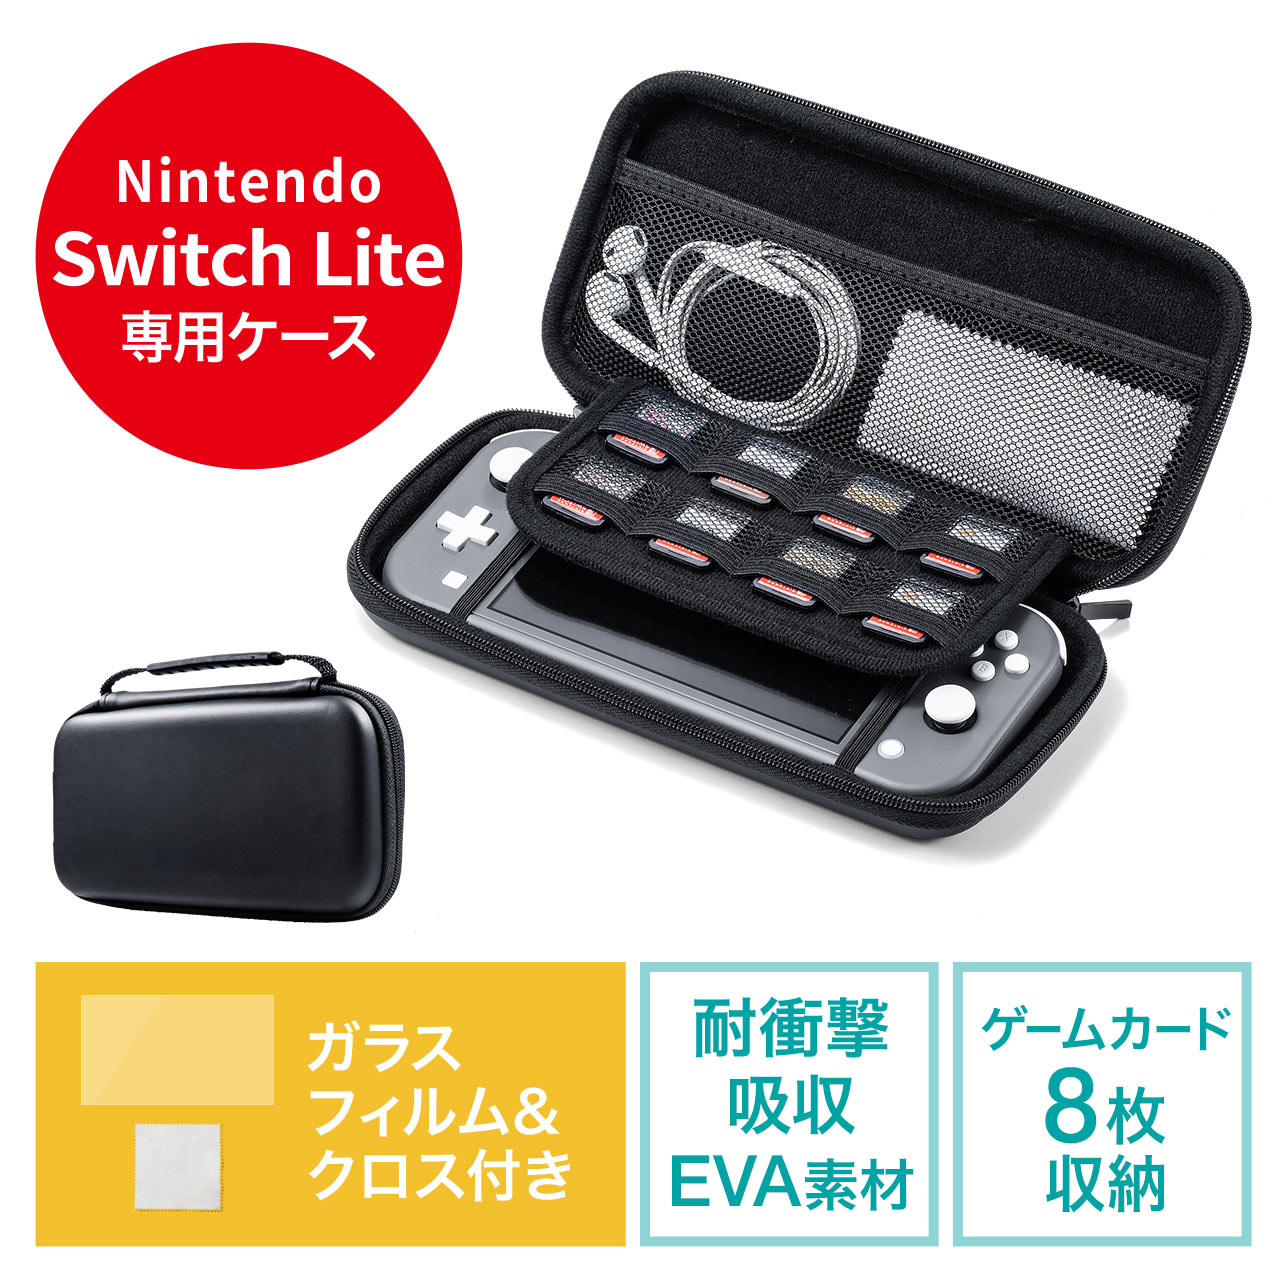 Nintendo Switch Liteグレー 値下げしません